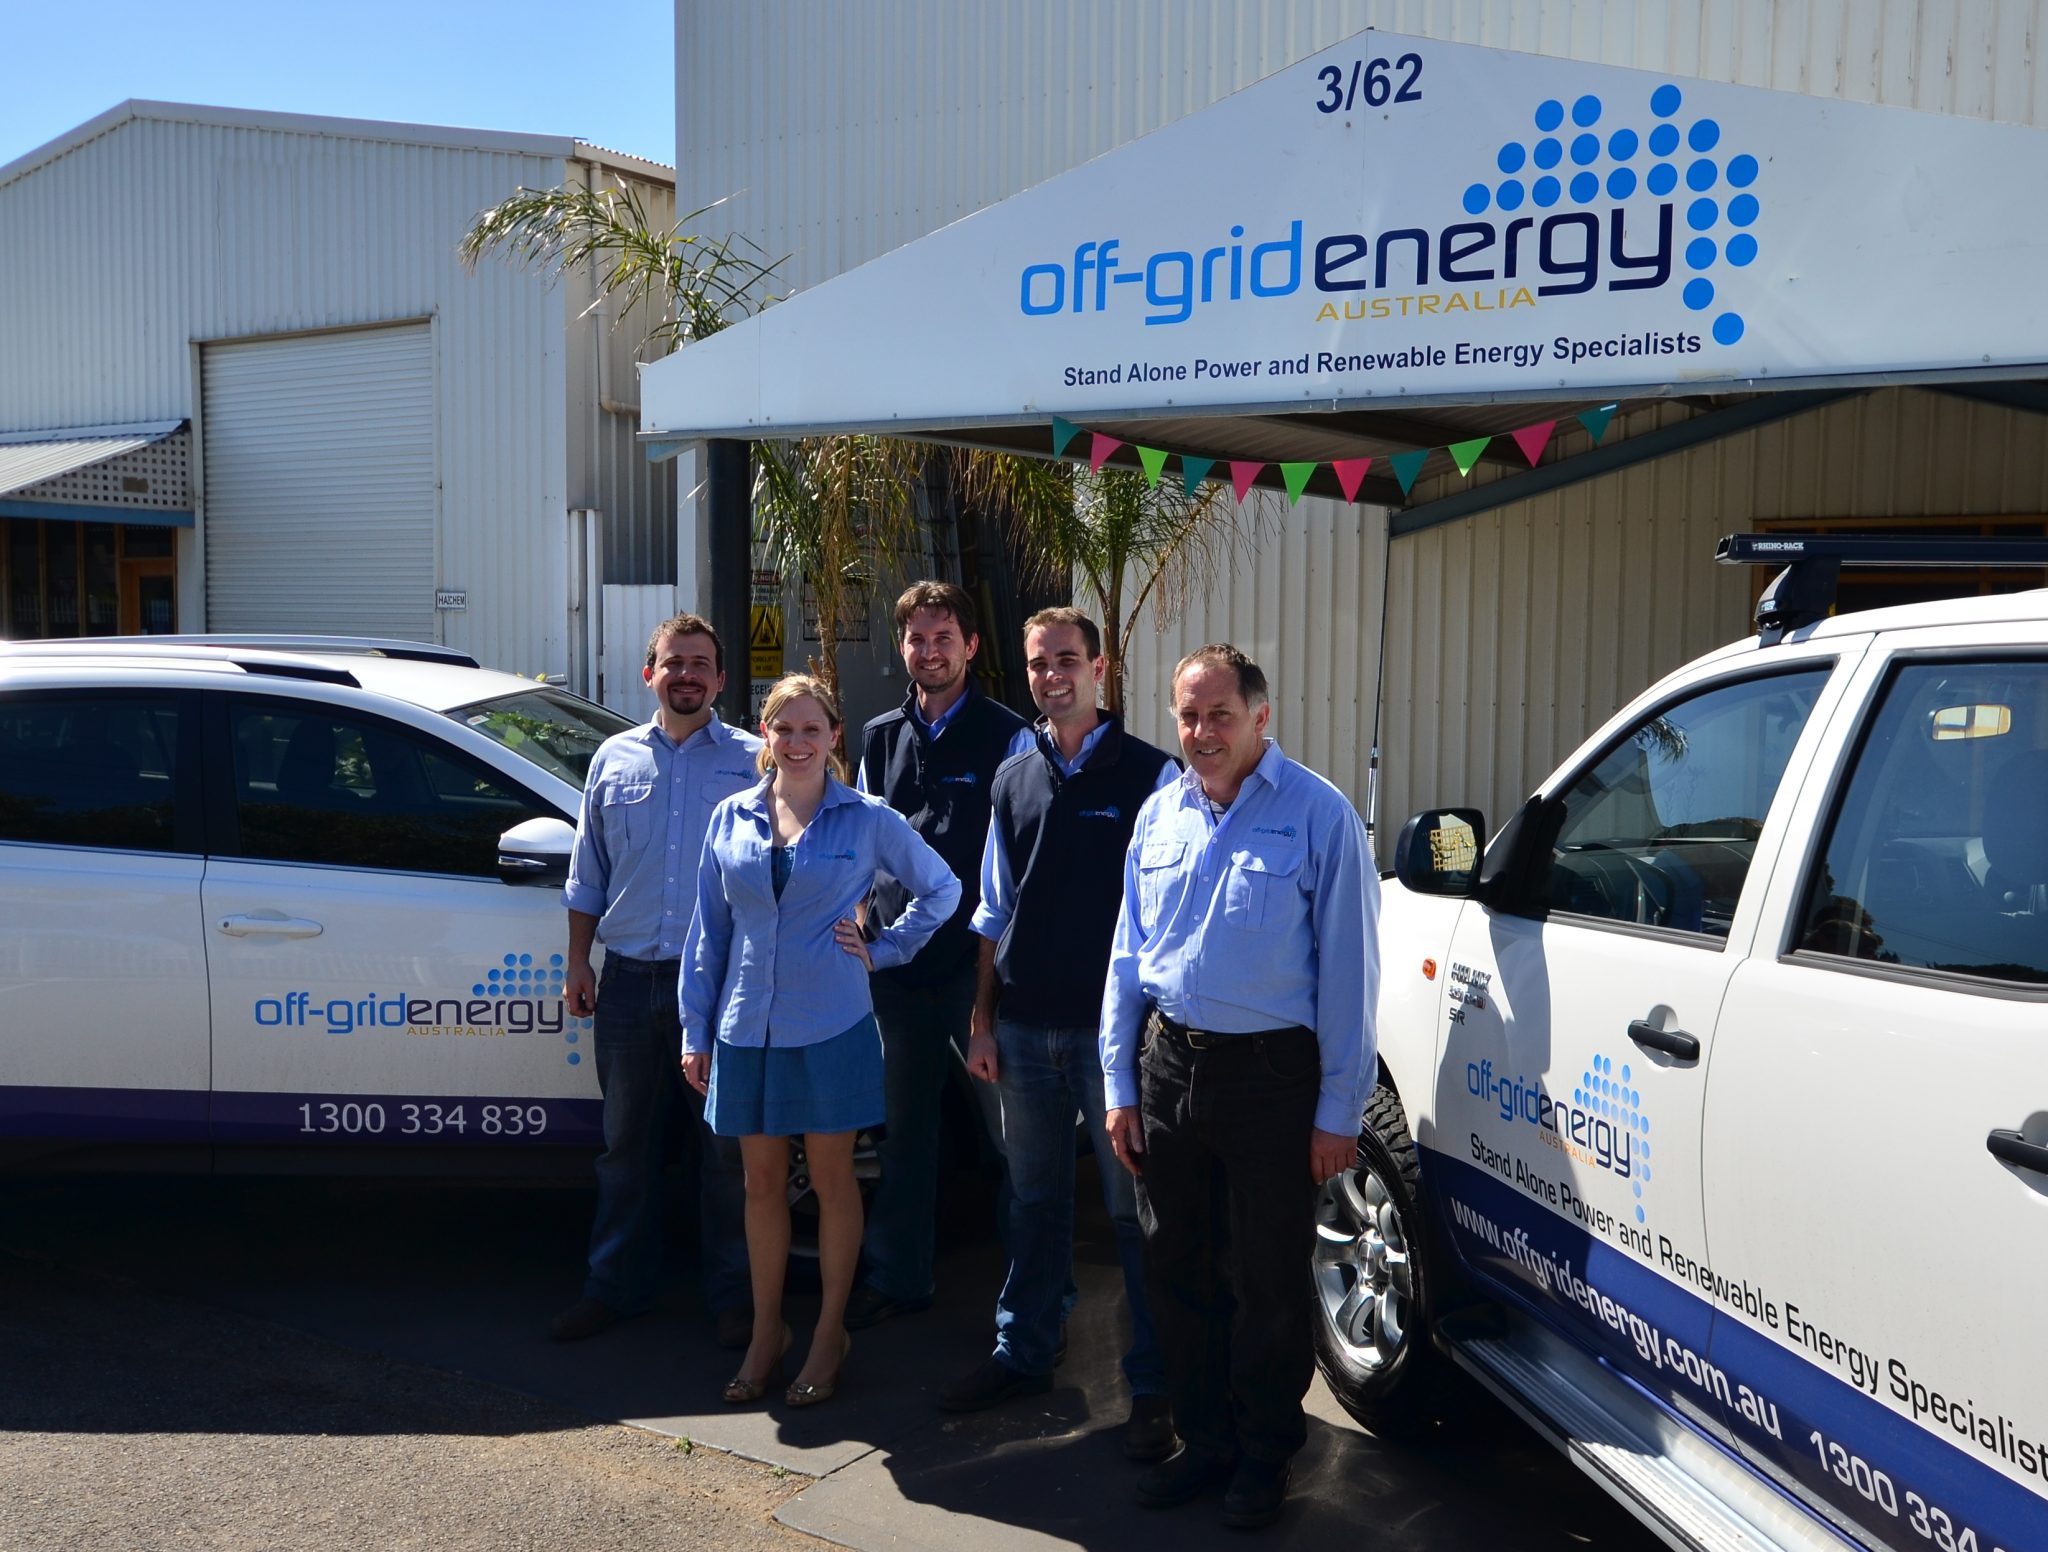 Off-grid Energy Australia team in SA